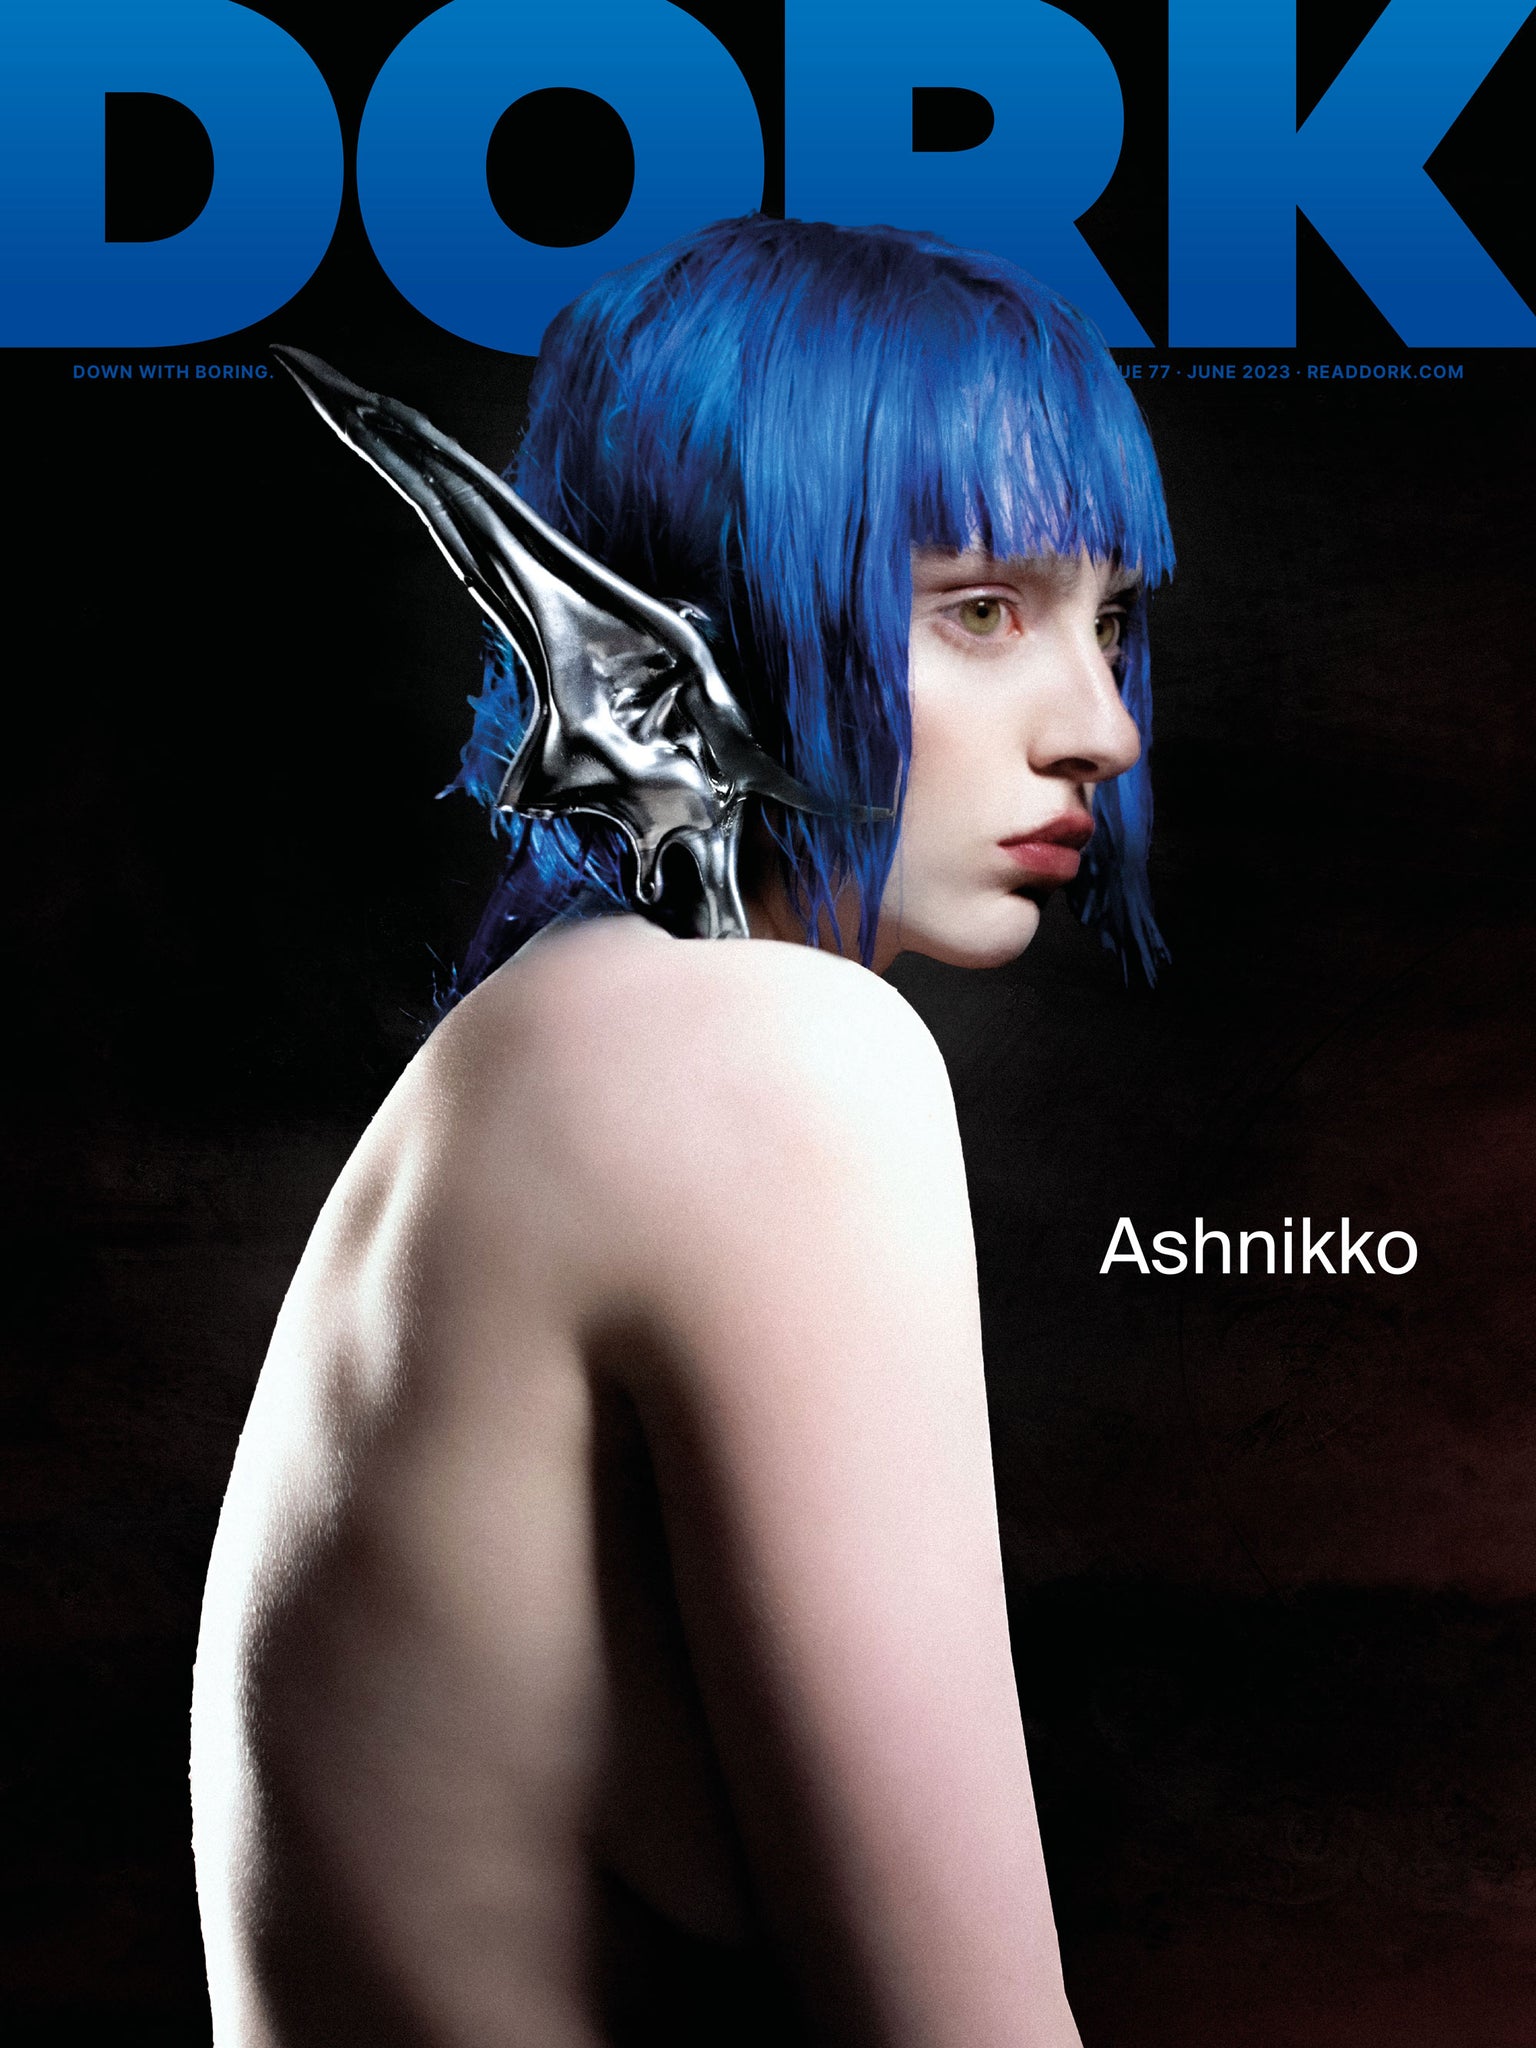 Dork, June 2023 (Ashnikko cover)